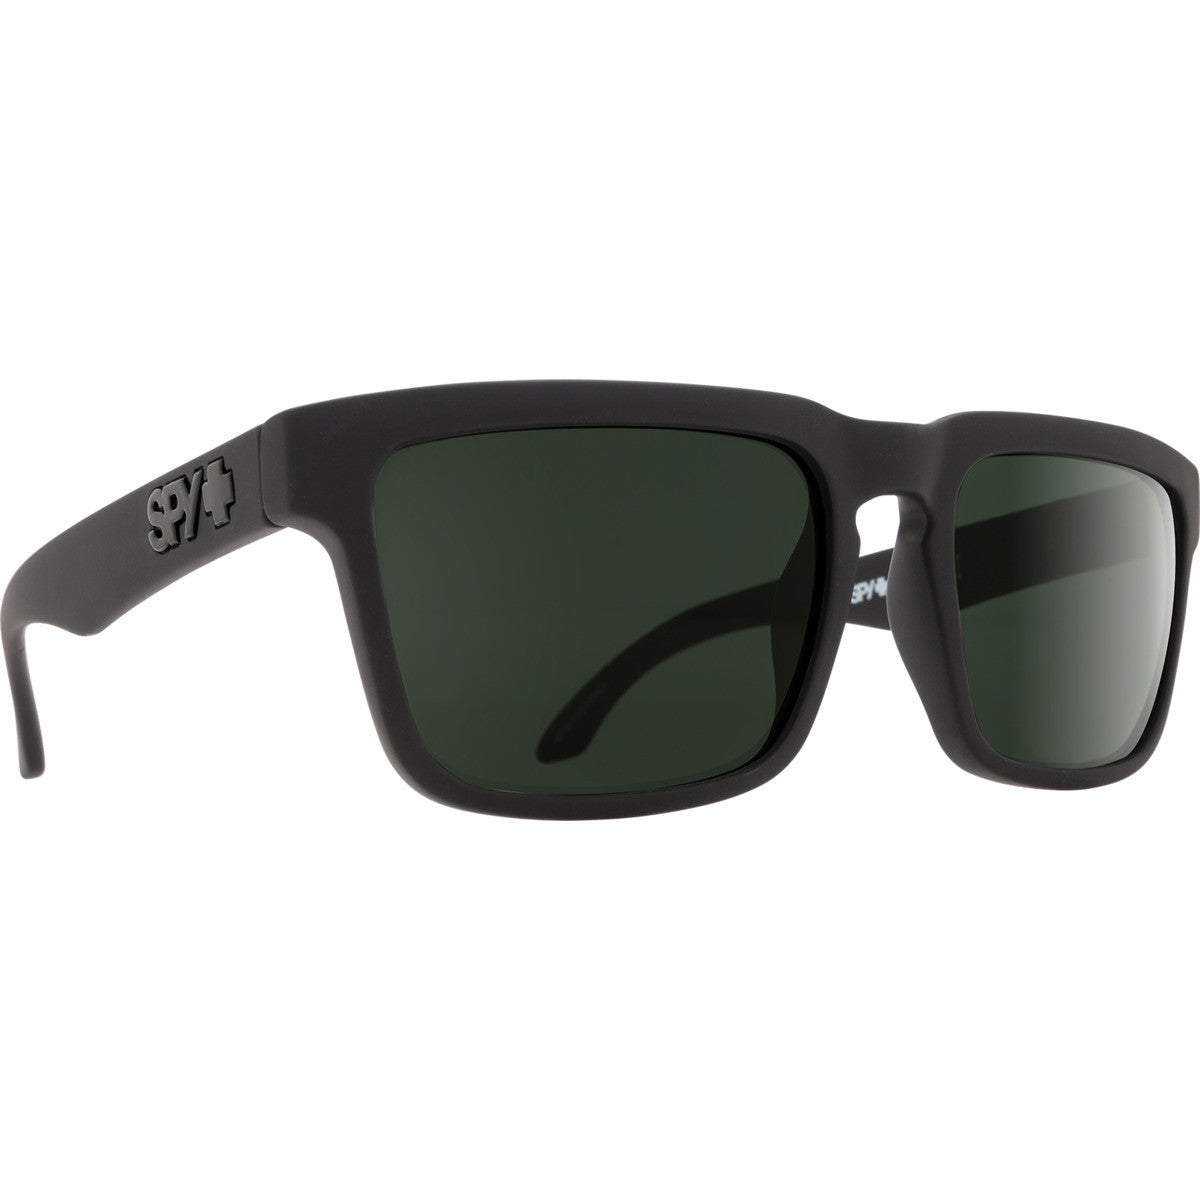 Spy Helm Sunglasses  Black Soft Matte Medium-Large M-L 54-61